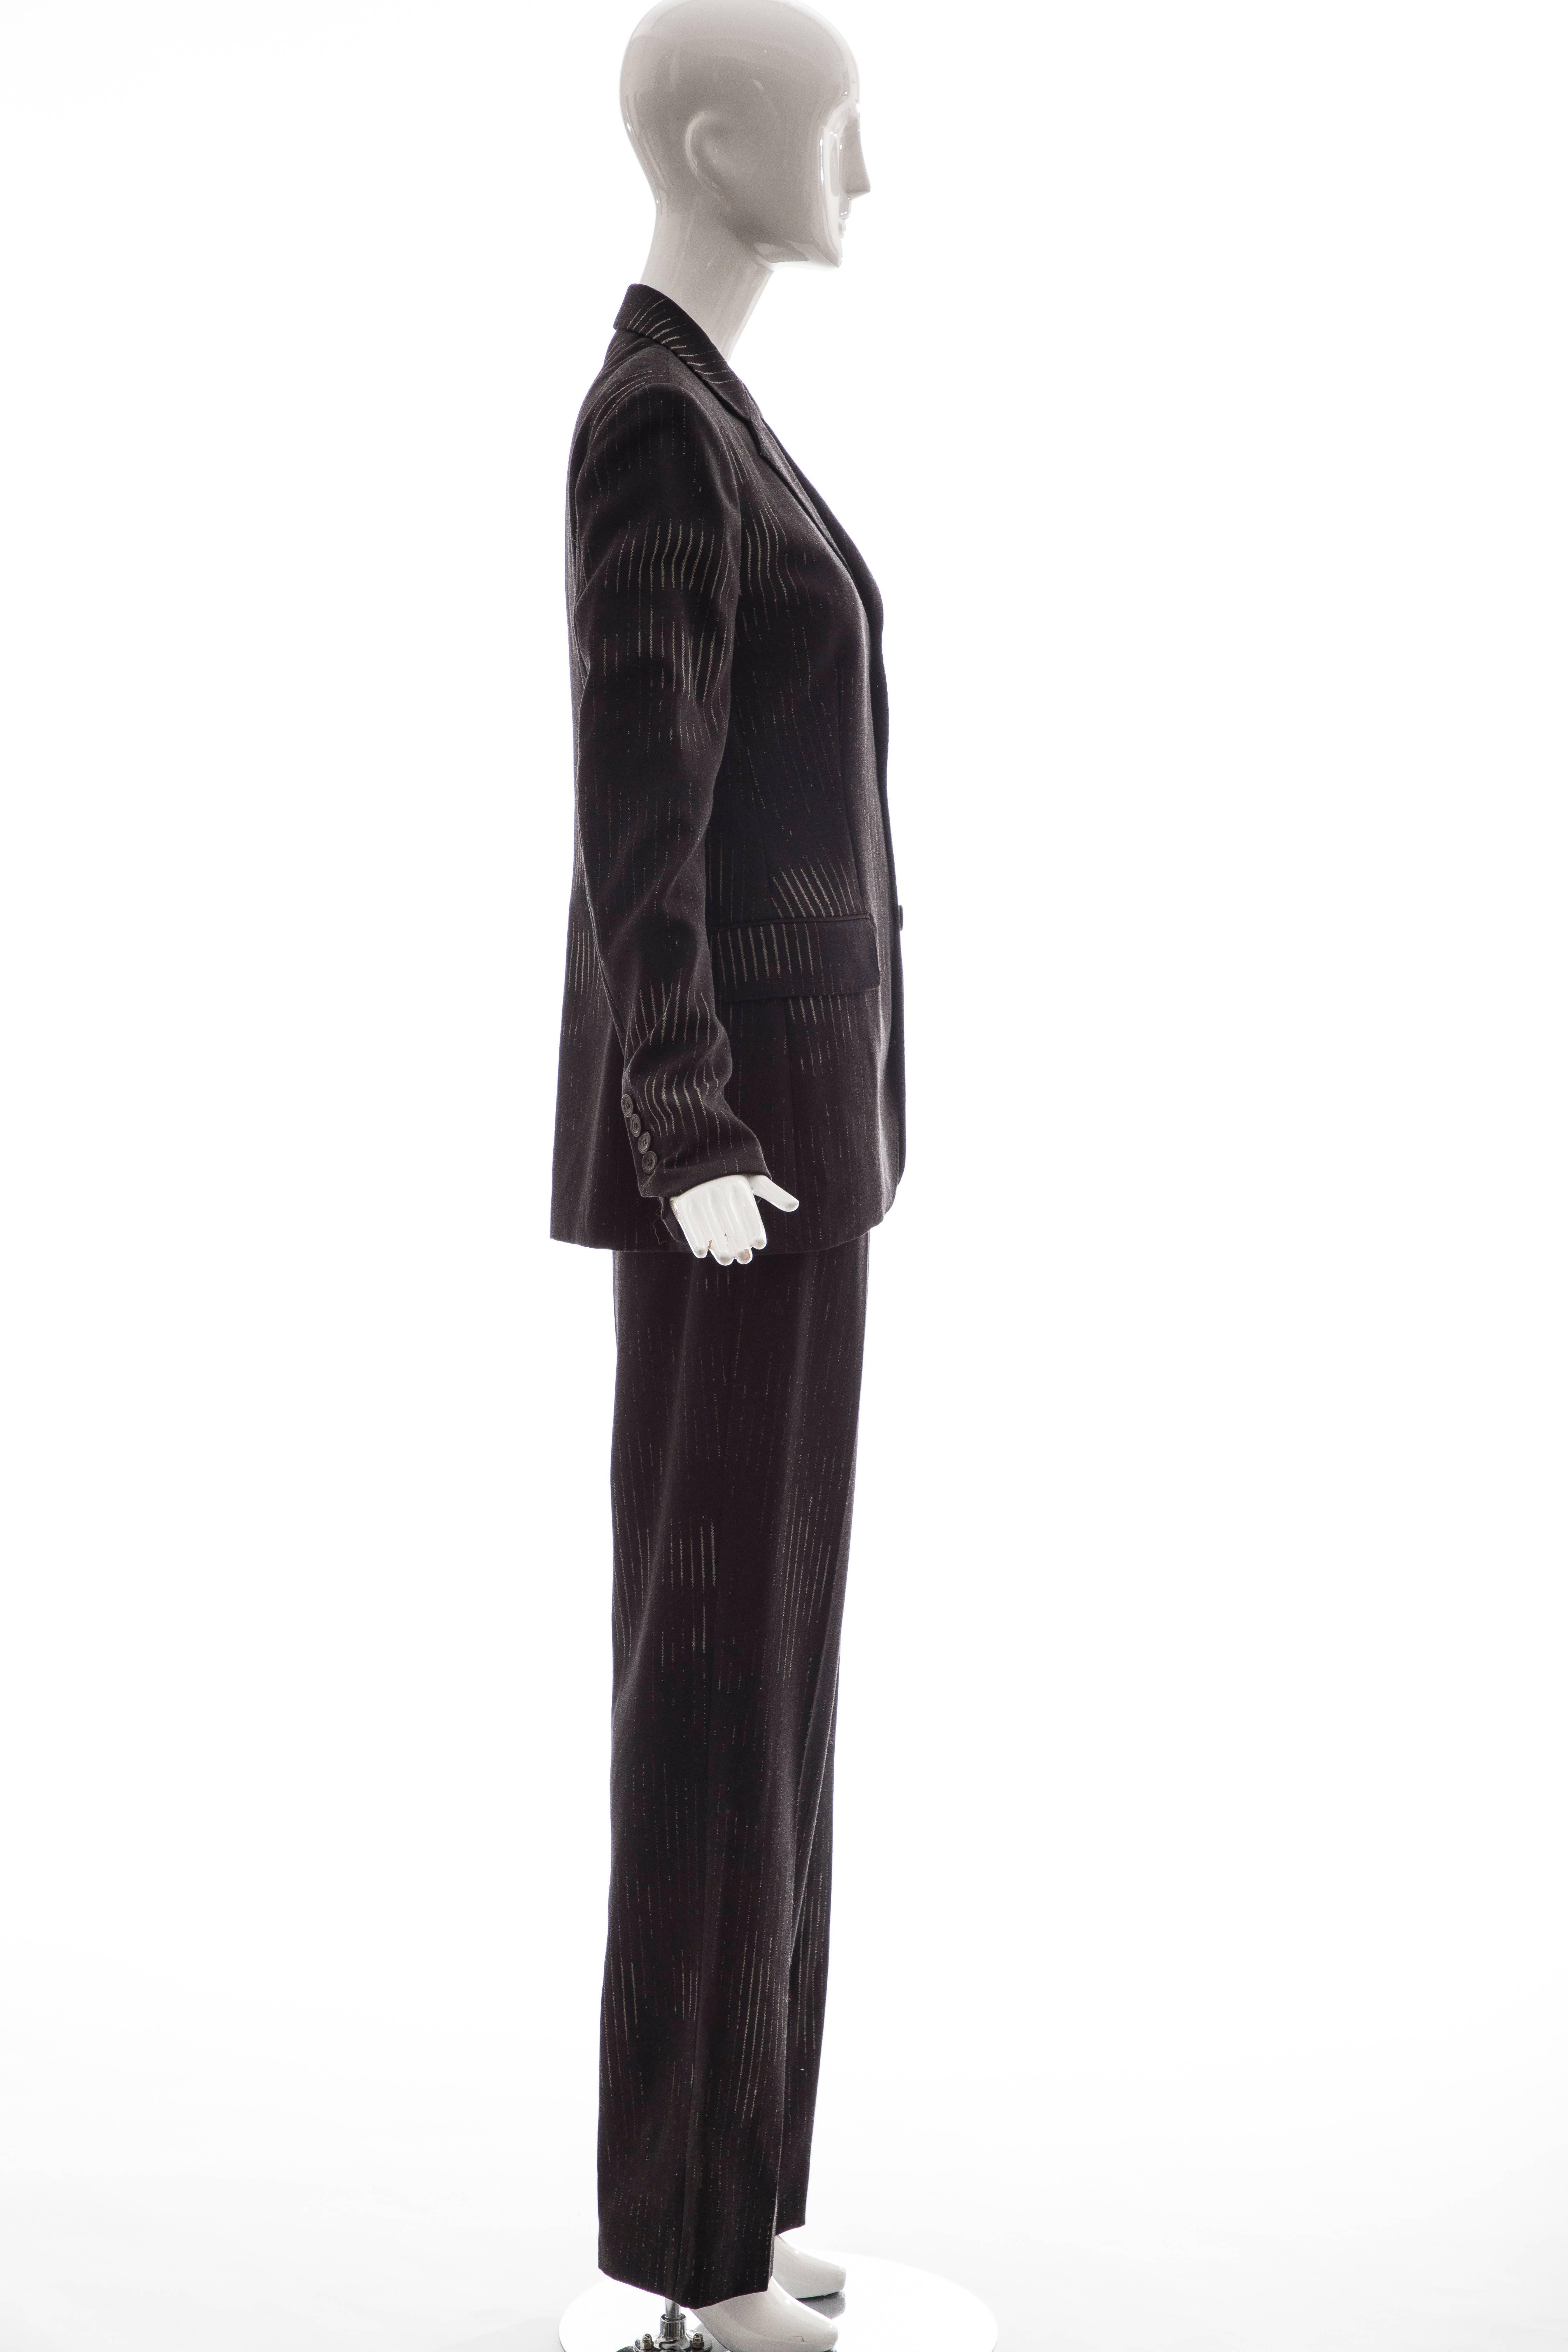 Jean Paul Gaultier 3D Printed Faces Wool Grey Pinstripe Pantsuit, Circa 1990's 2